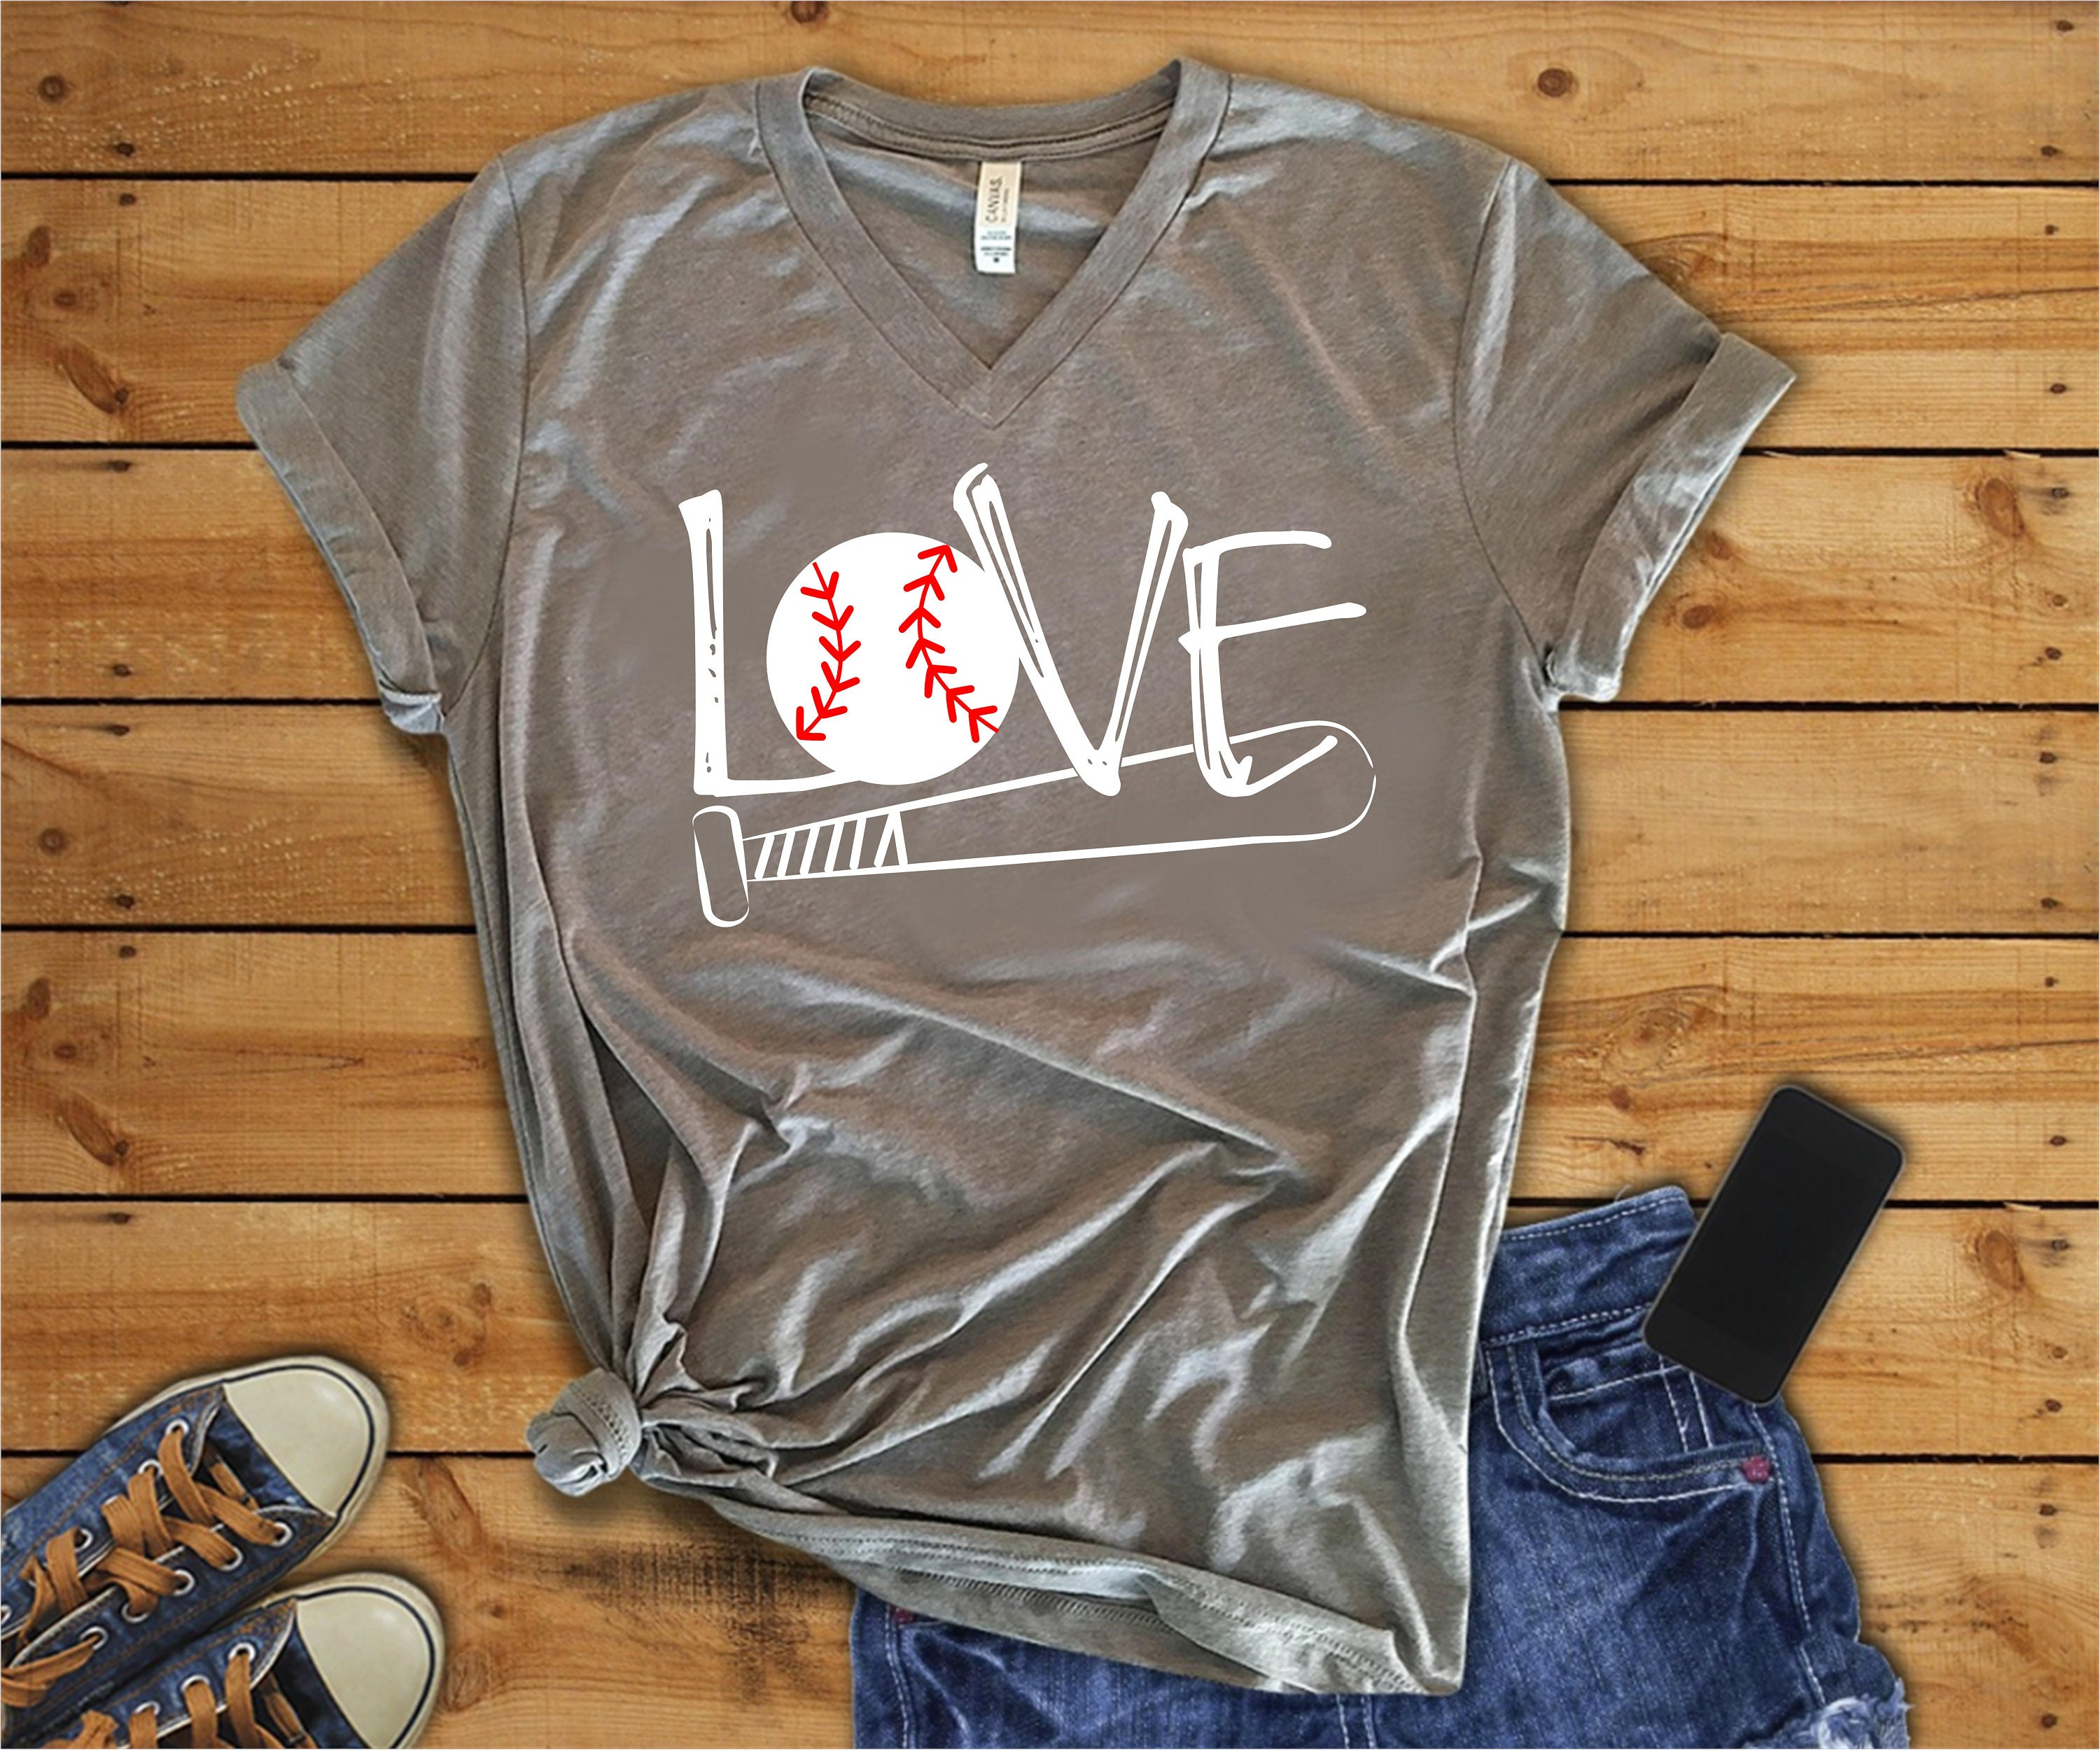 cute baseball mom shirts